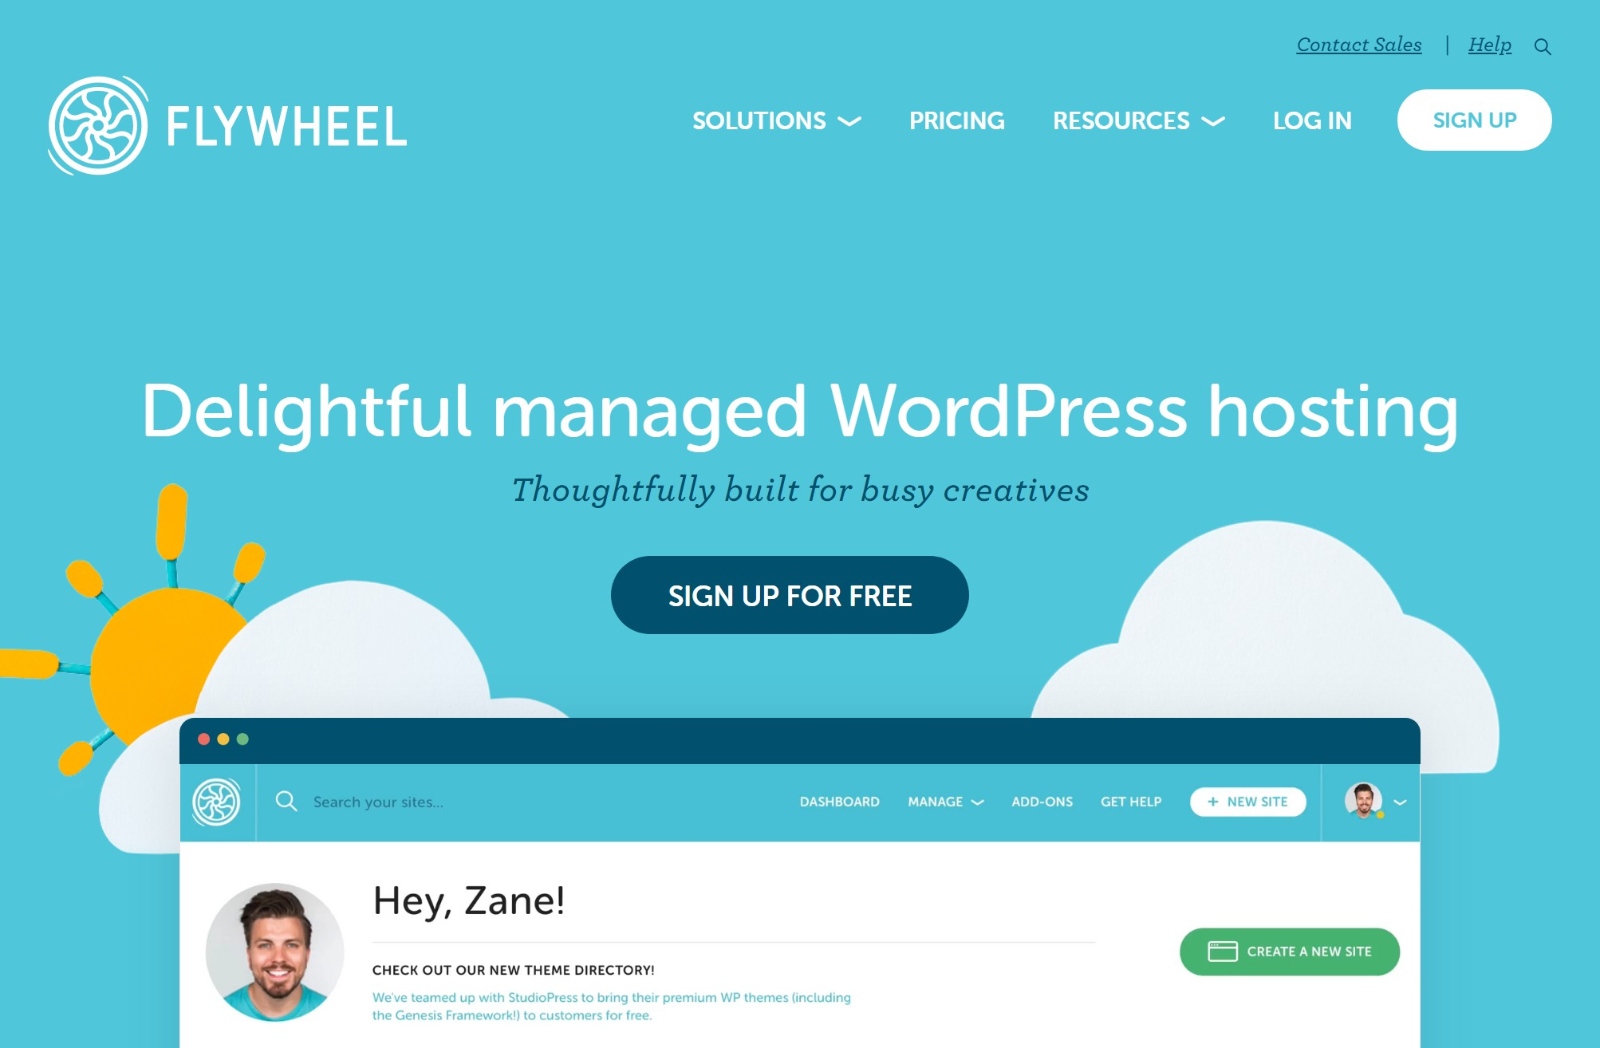 Flywheel managed WordPress hosting